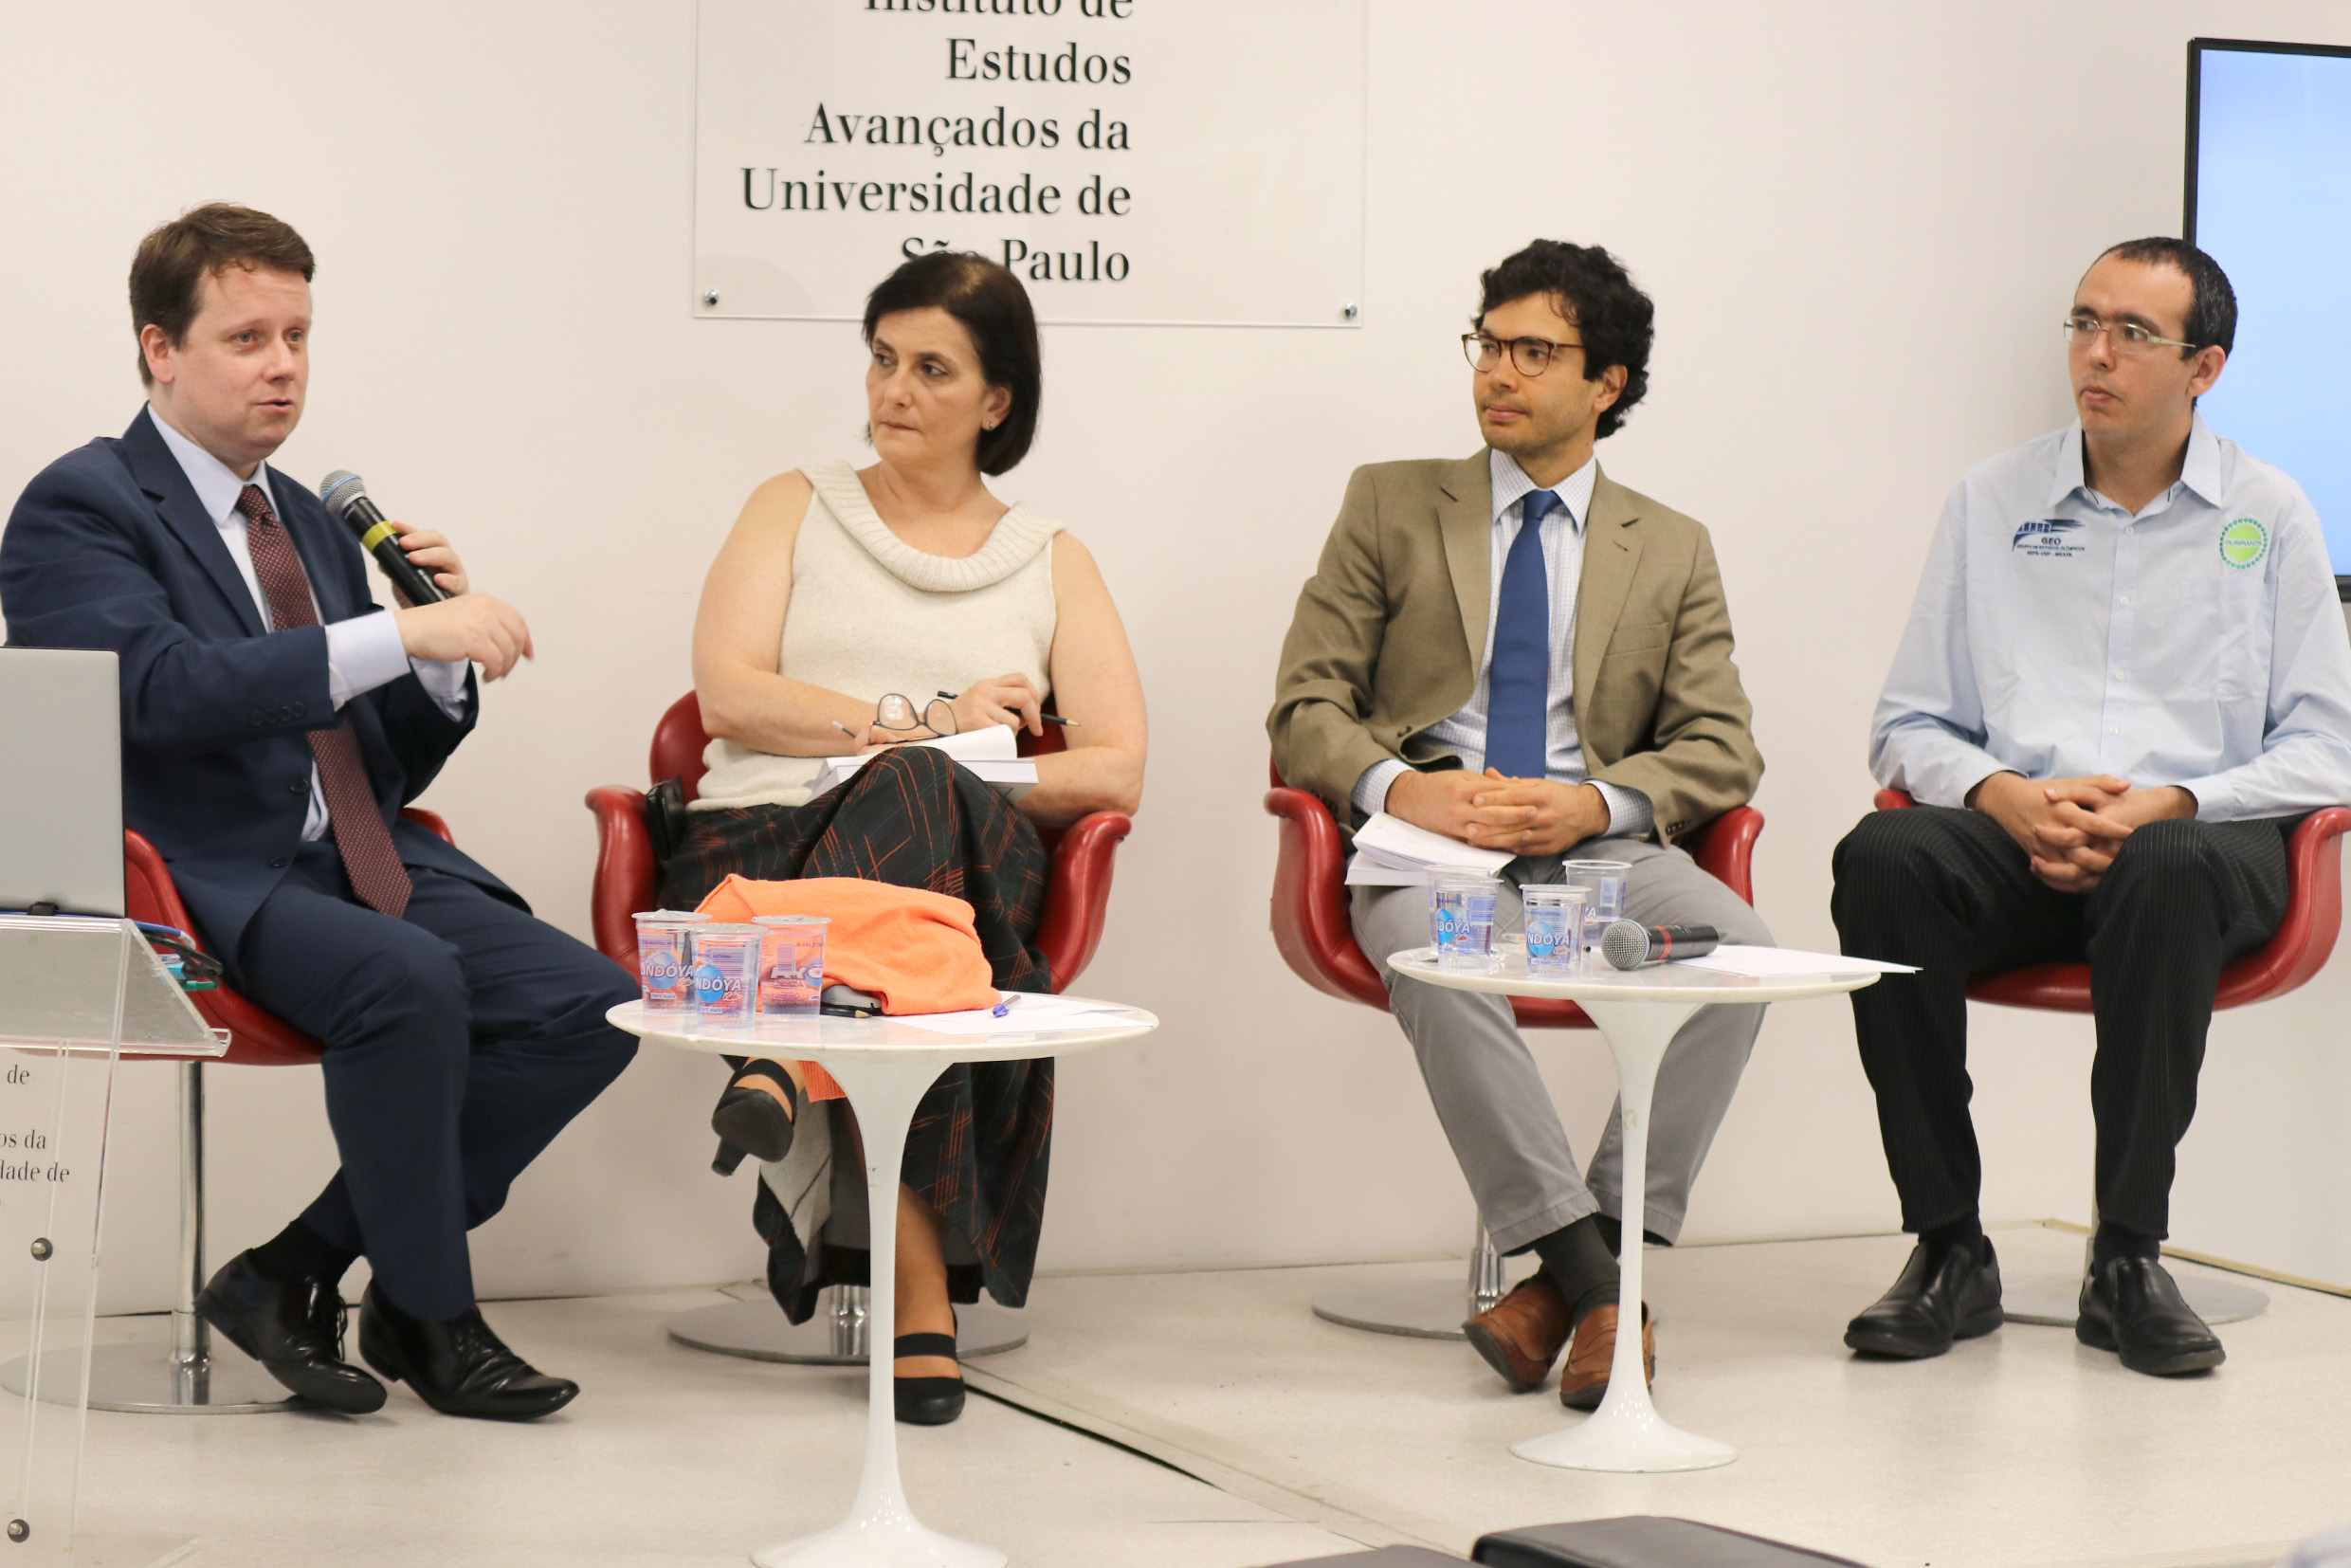 Gustavo Ferraz de Campos Monaco, Katia Rubio, Jean Nicolau e William Douglas de Almeida